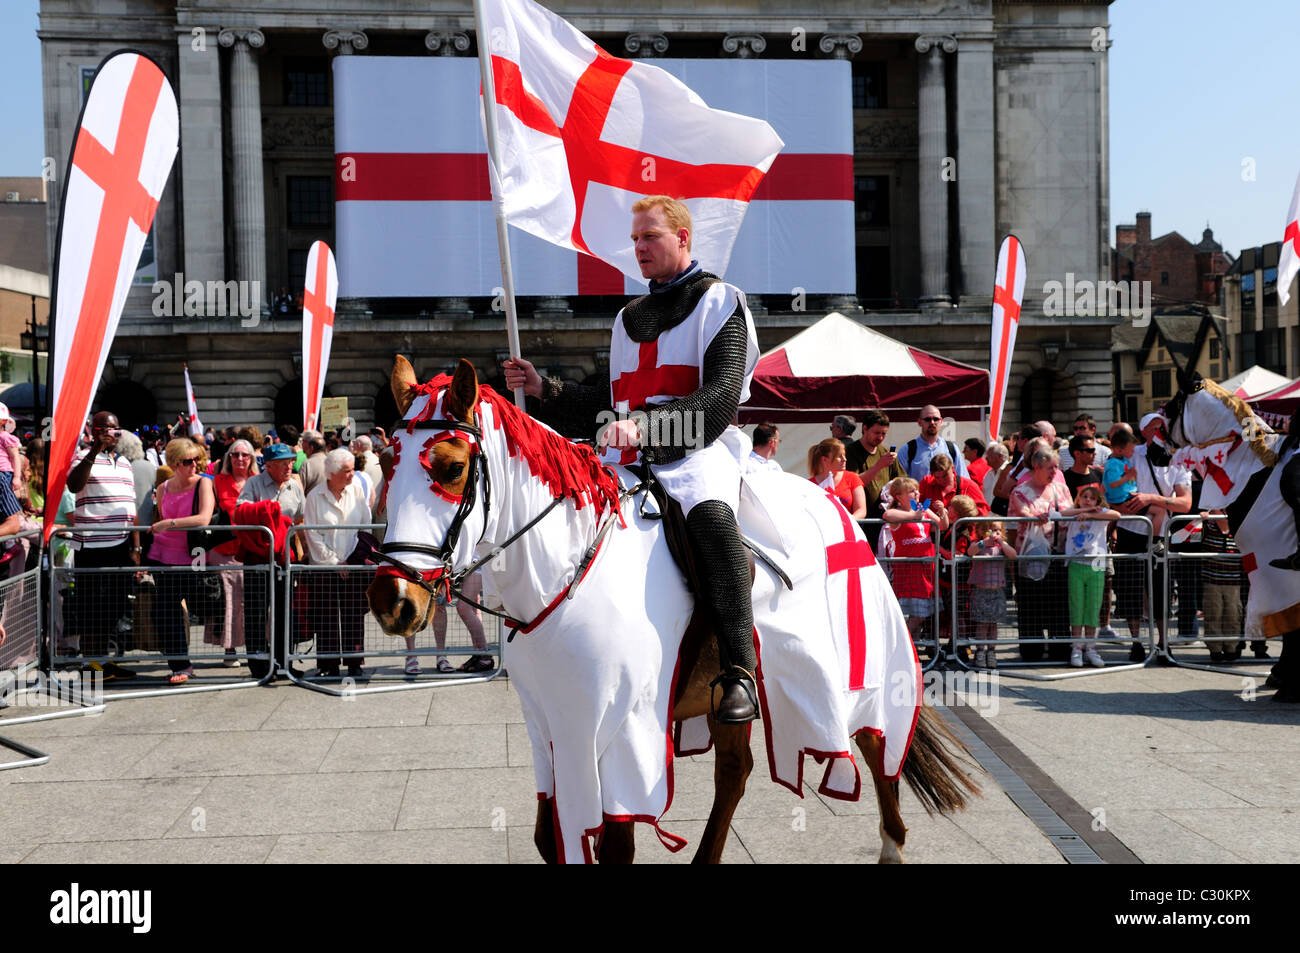 English events. St. George's Day в Великобритании. Святого Георгия – покровителя Англии.